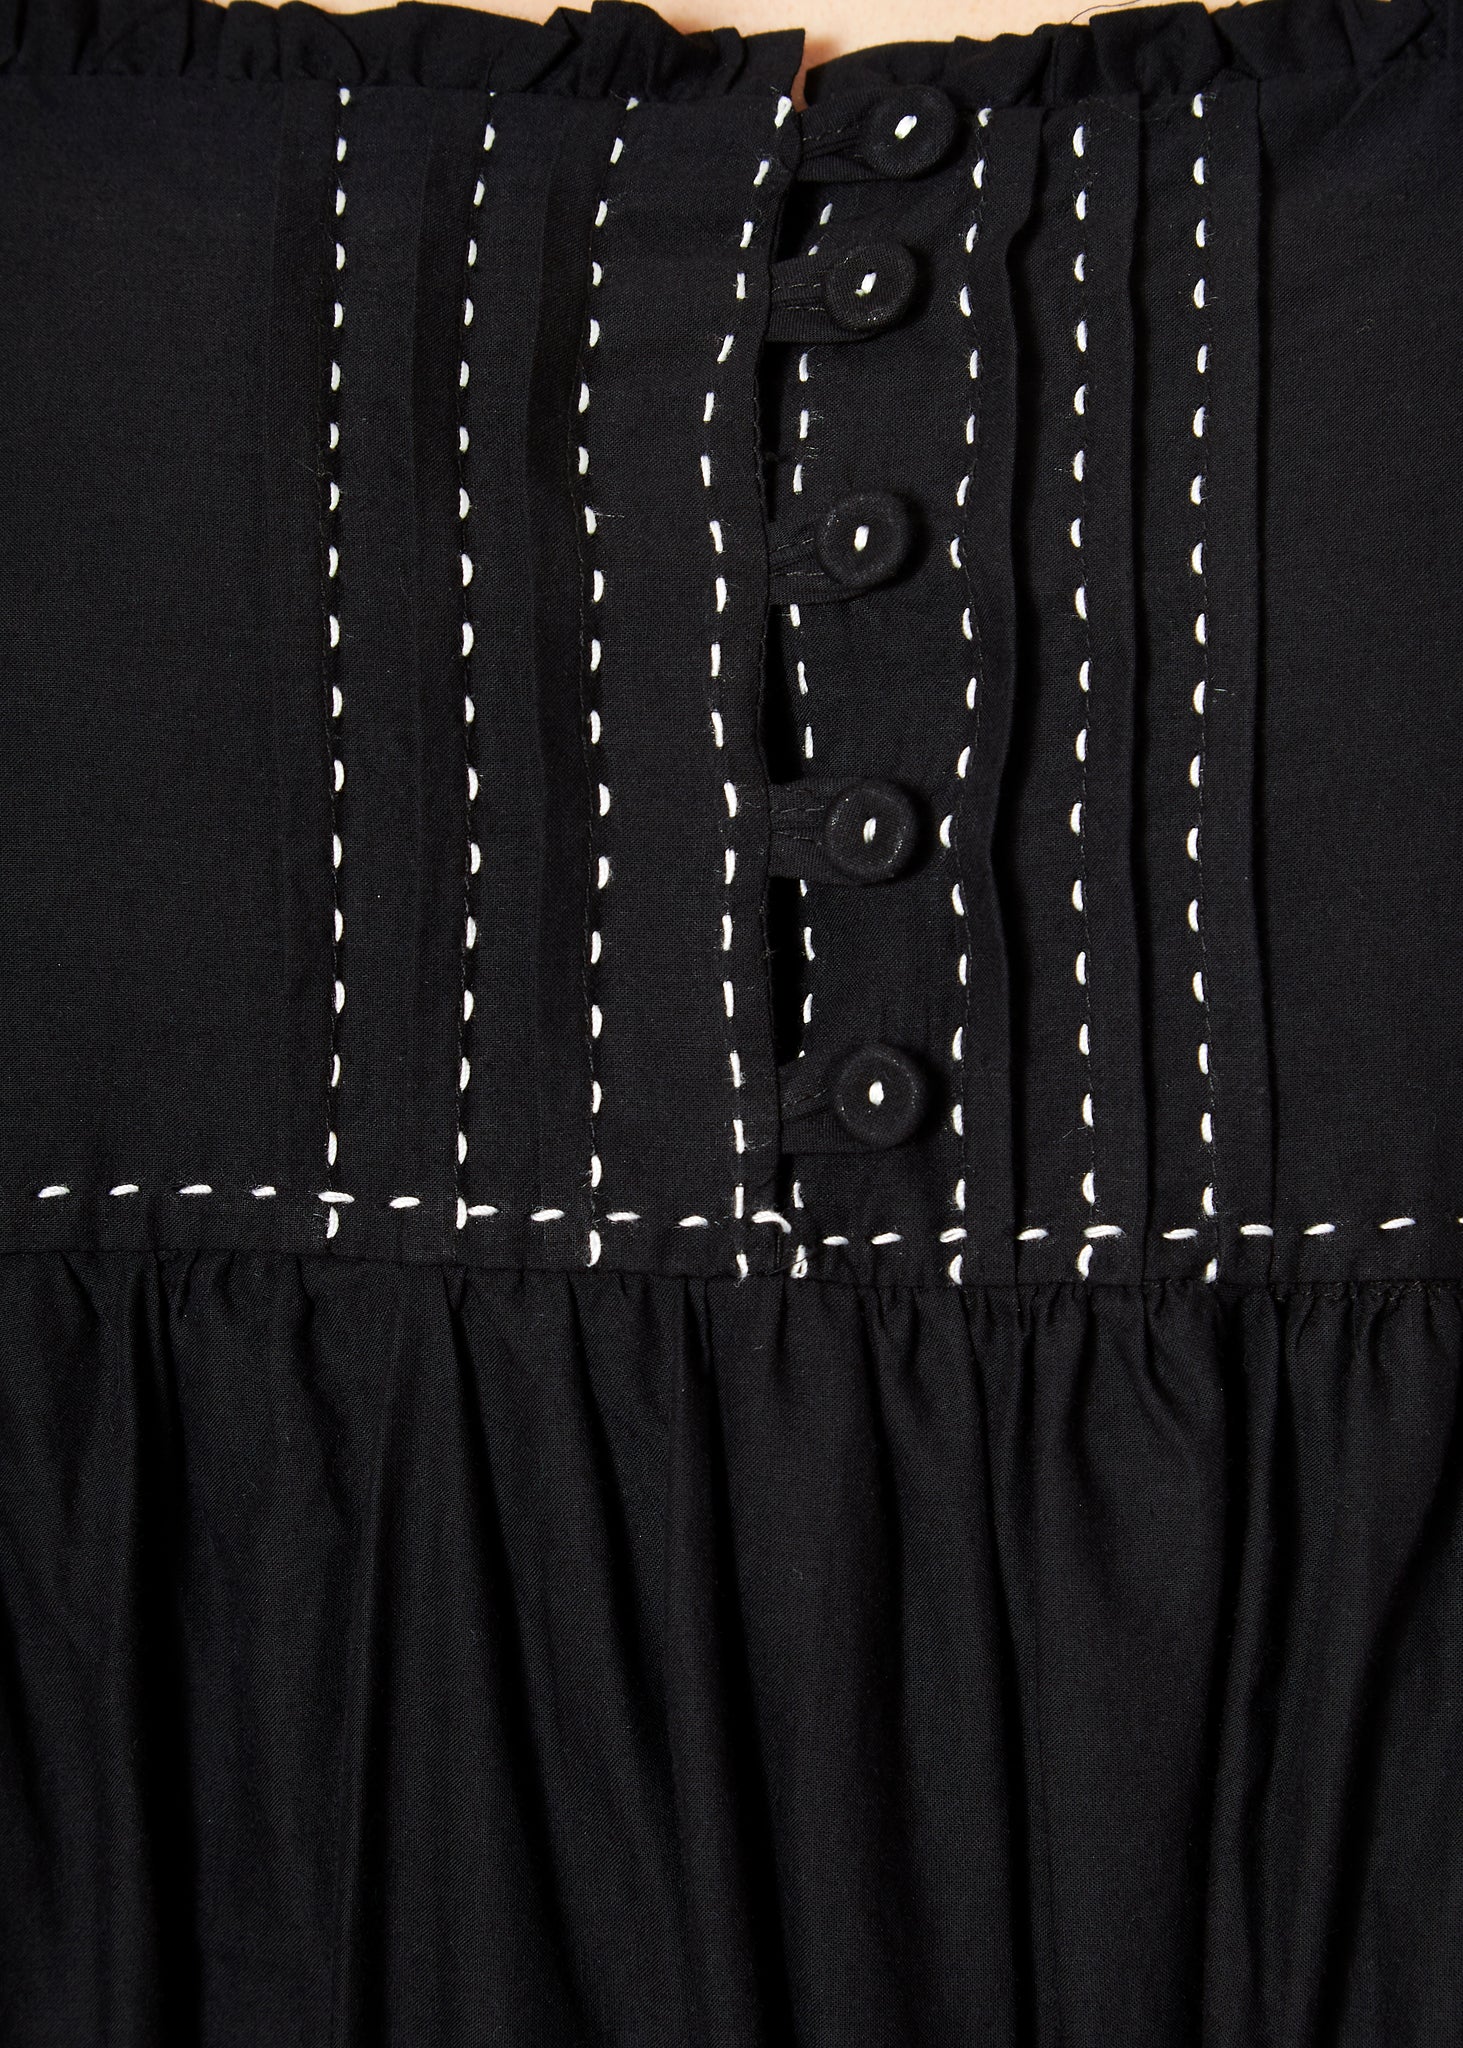 Peridotos Black Shoe String Dress